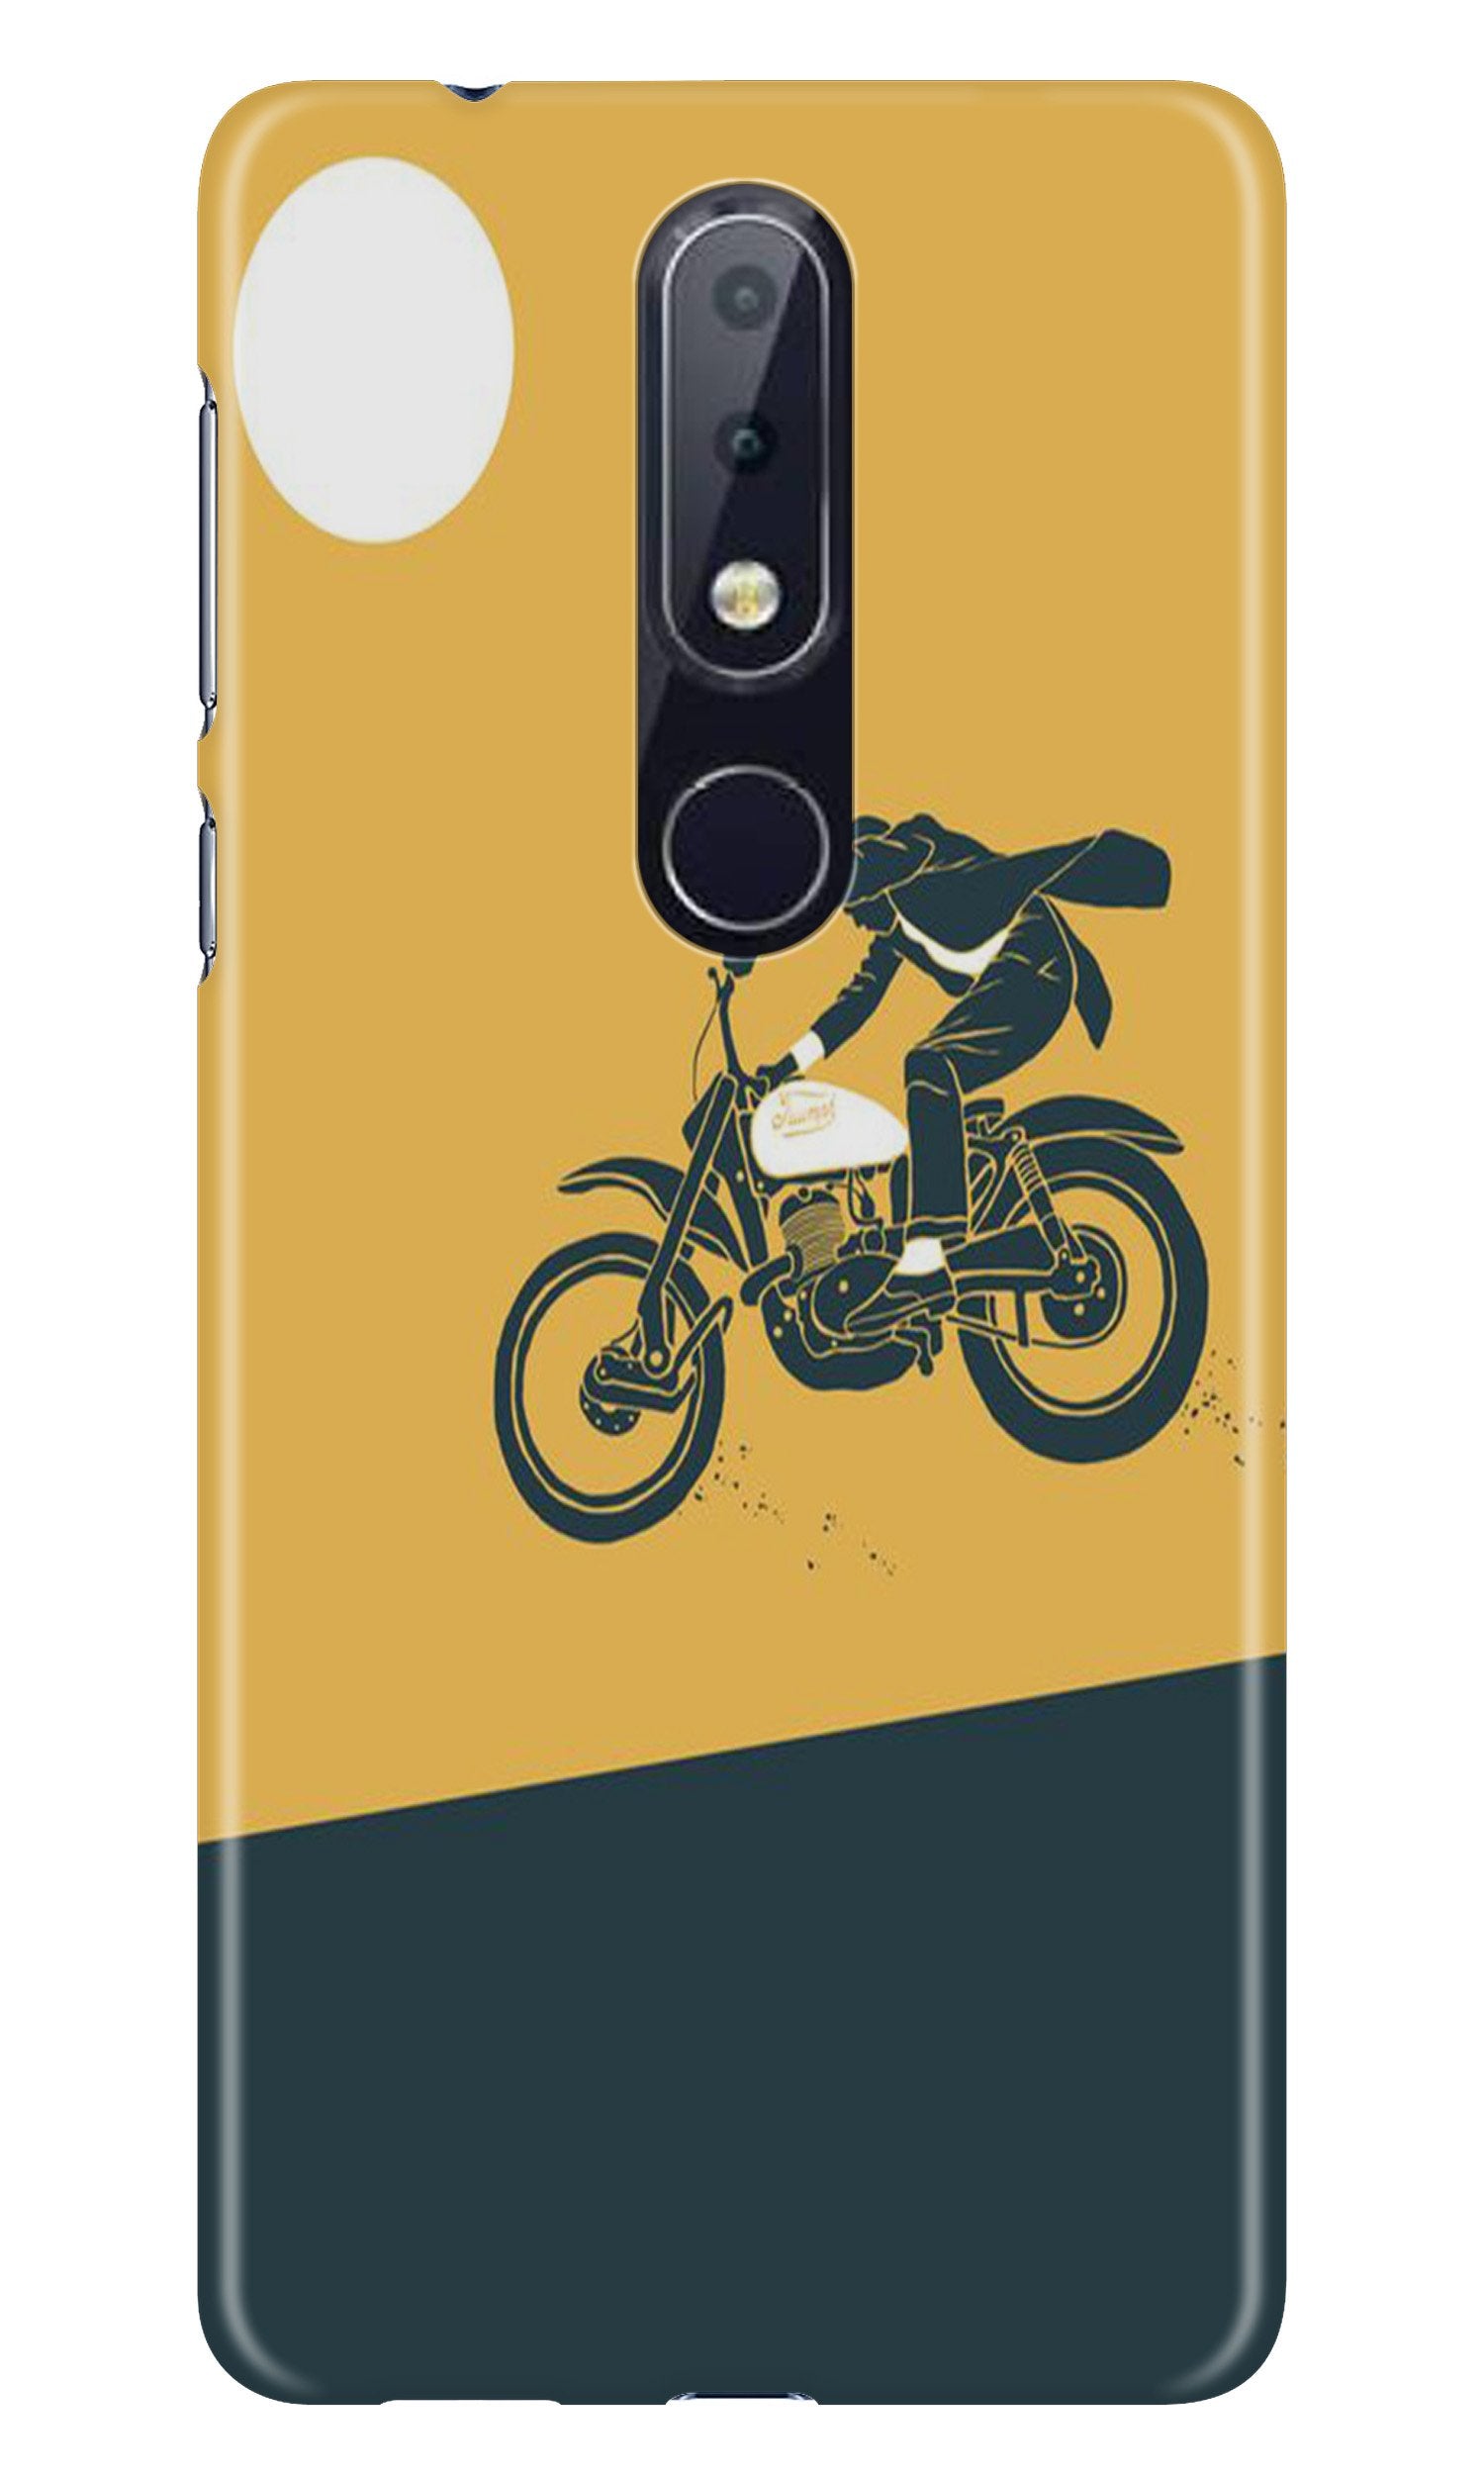 Bike Lovers Case for Nokia 6.1 Plus (Design No. 256)